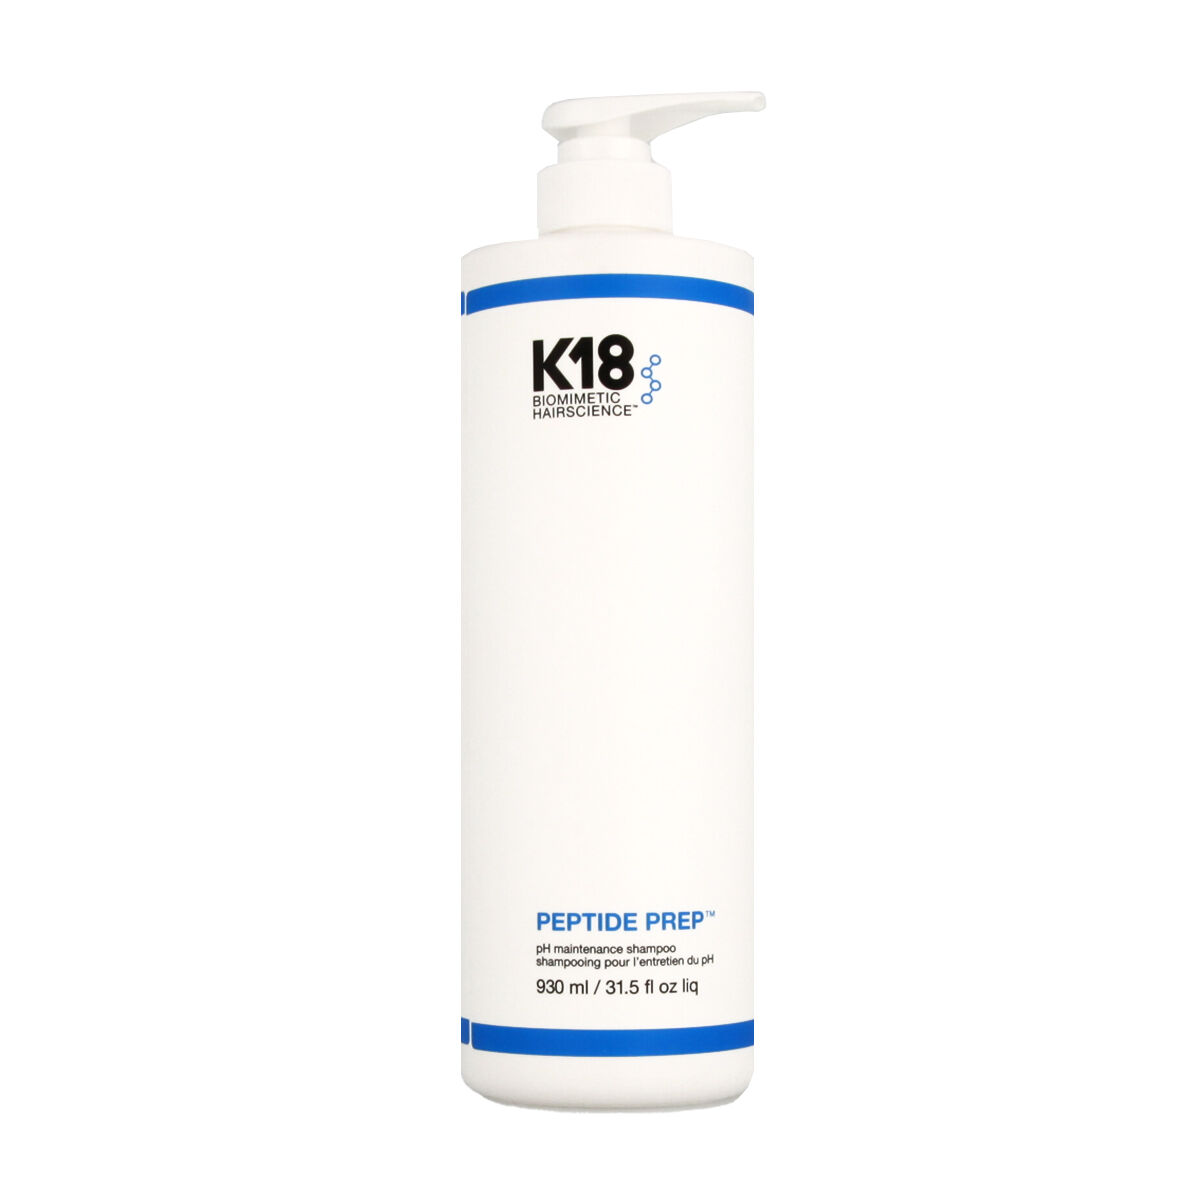 K18 - K18 | Champú K18 Peptide Prep pH Maintenance 930 ml | Maquillajes | BB